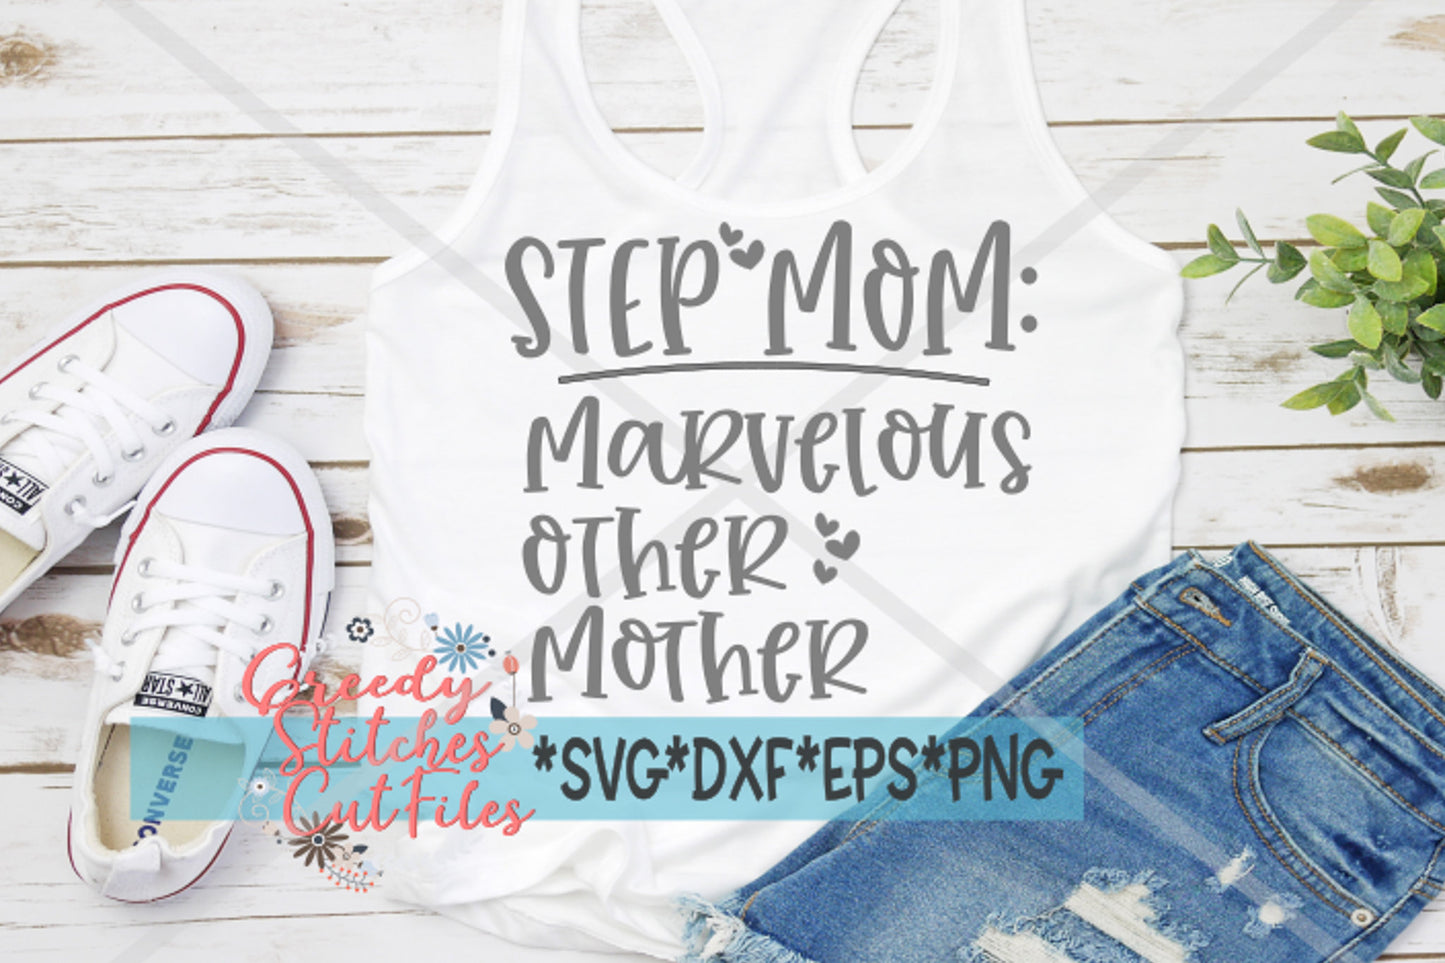 Step Mom: Marvelous Other Mother SvG | Mother&#39;s Day SVG | Bonus Mom SvG | Step Mom SvG | Step Mom svg dxf eps, png Instant Download Cut File